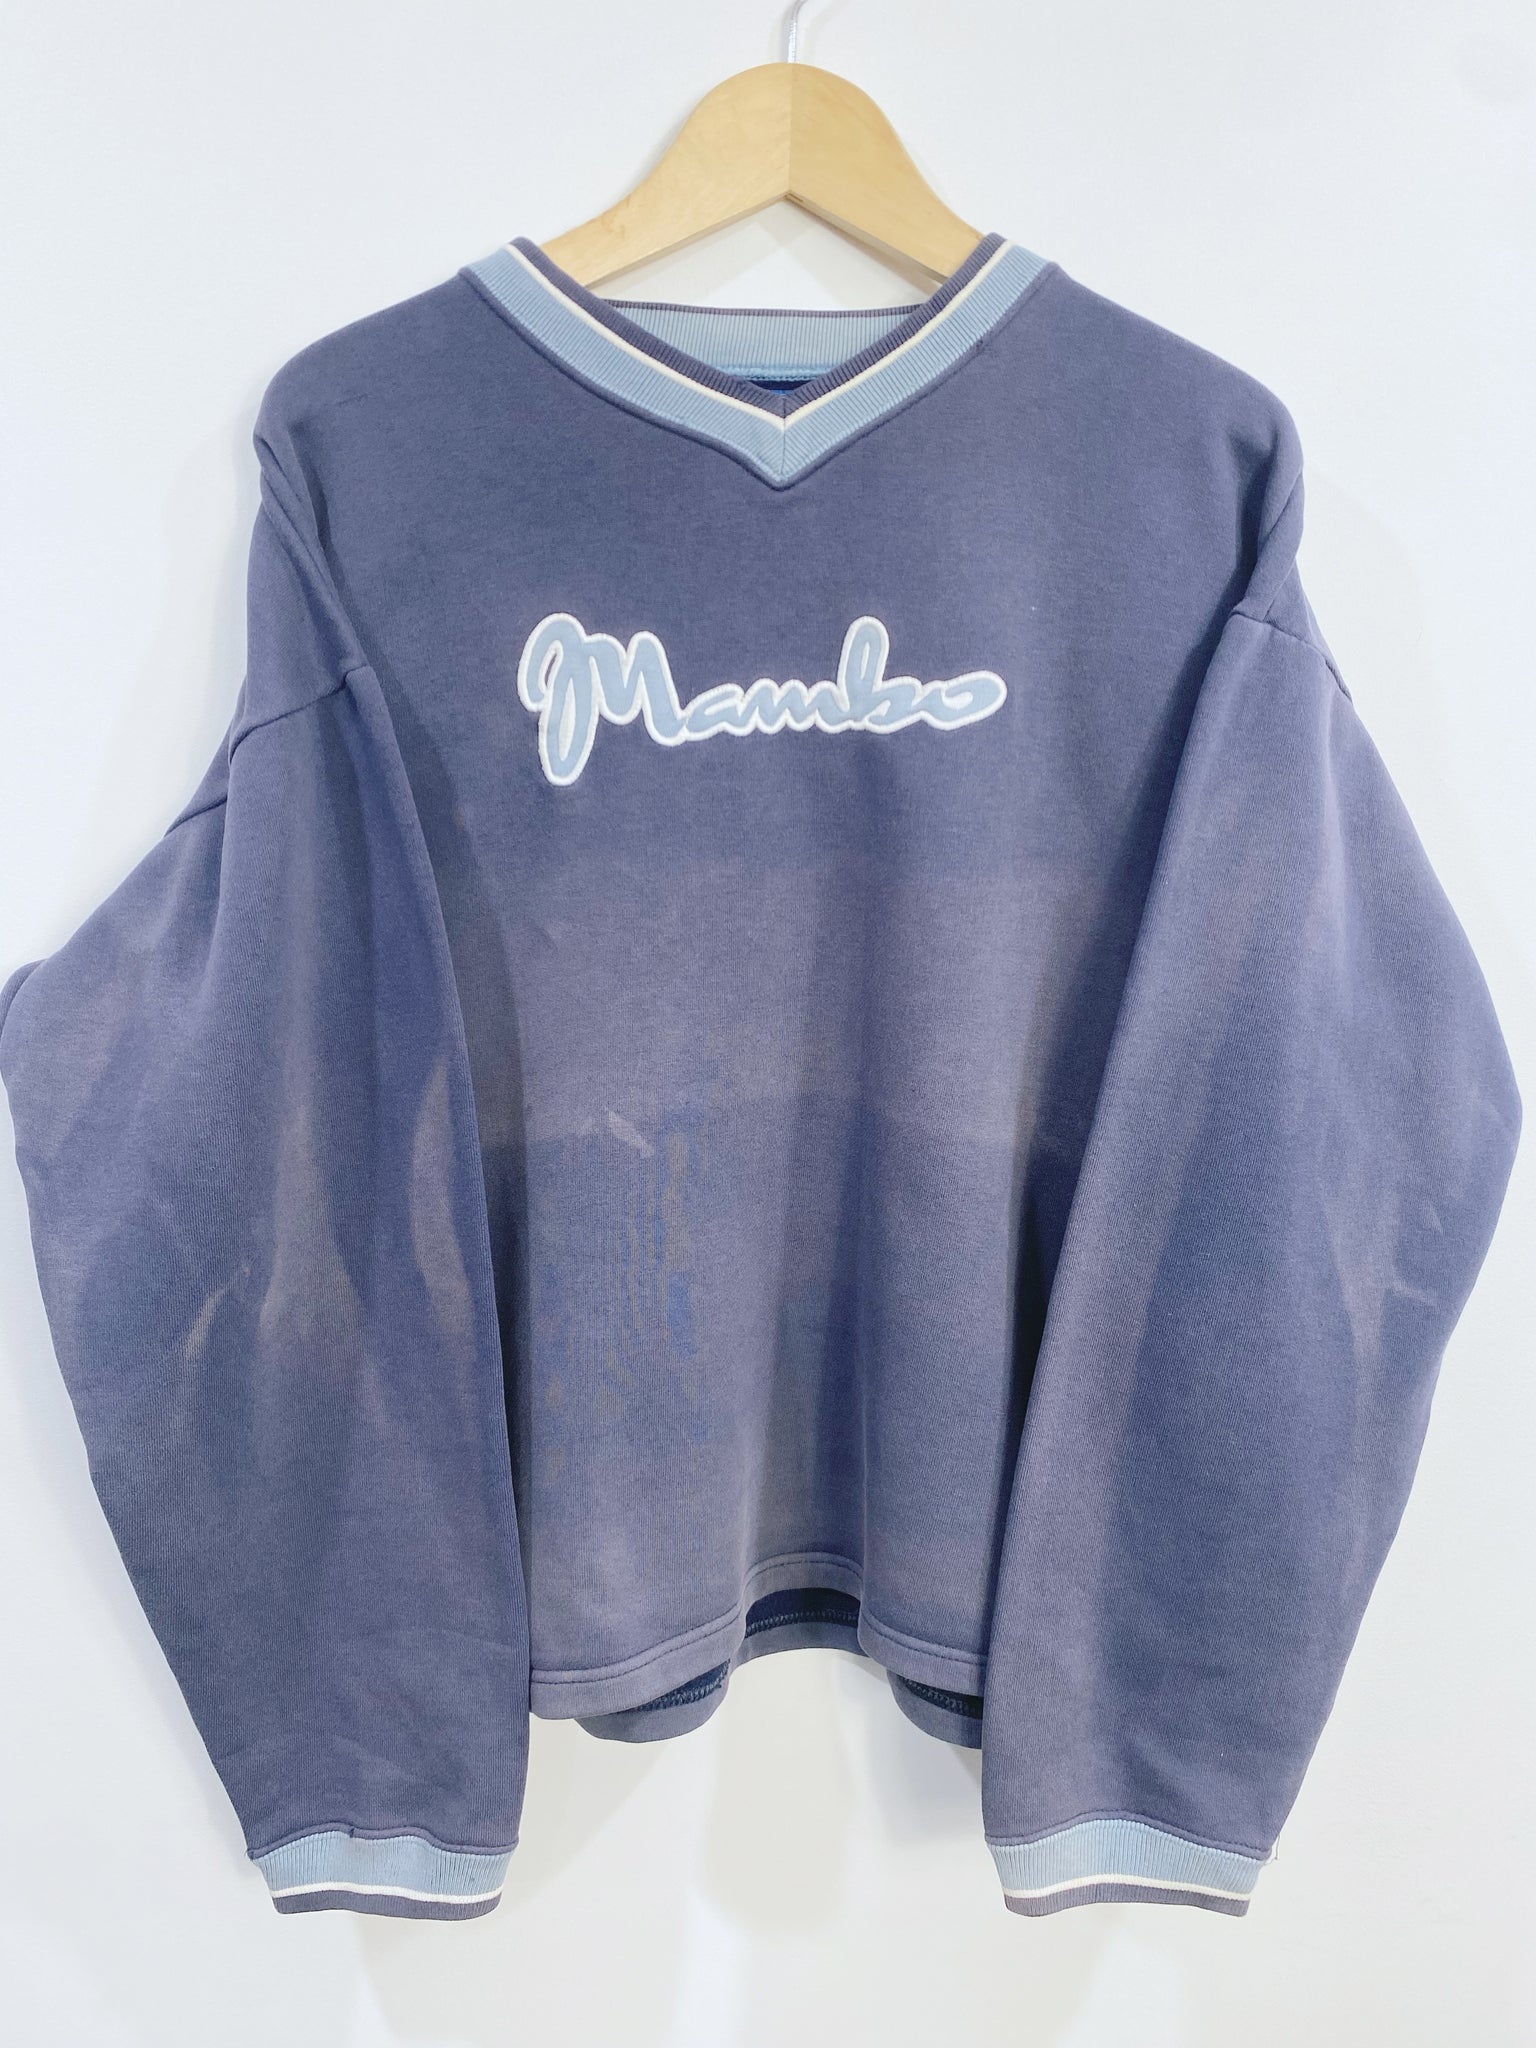 Vintage 90s Mambo Embroidered Sweatshirt L